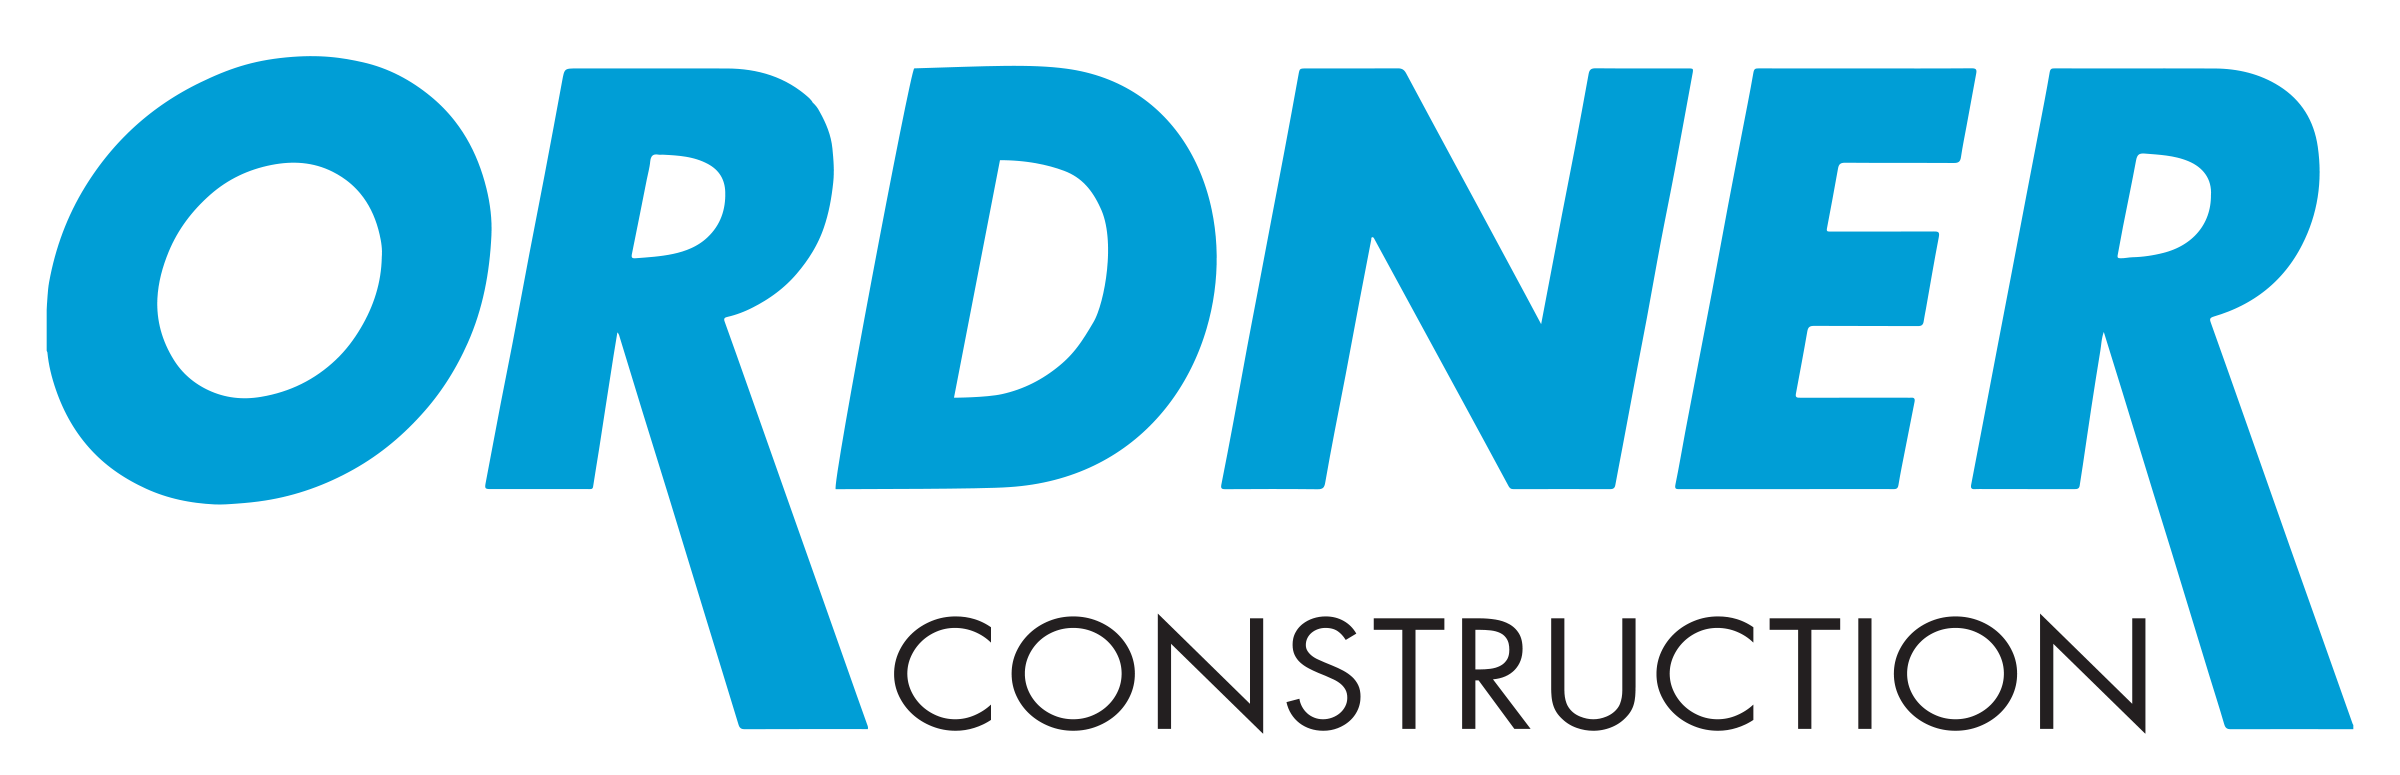 Ordner Construction logo